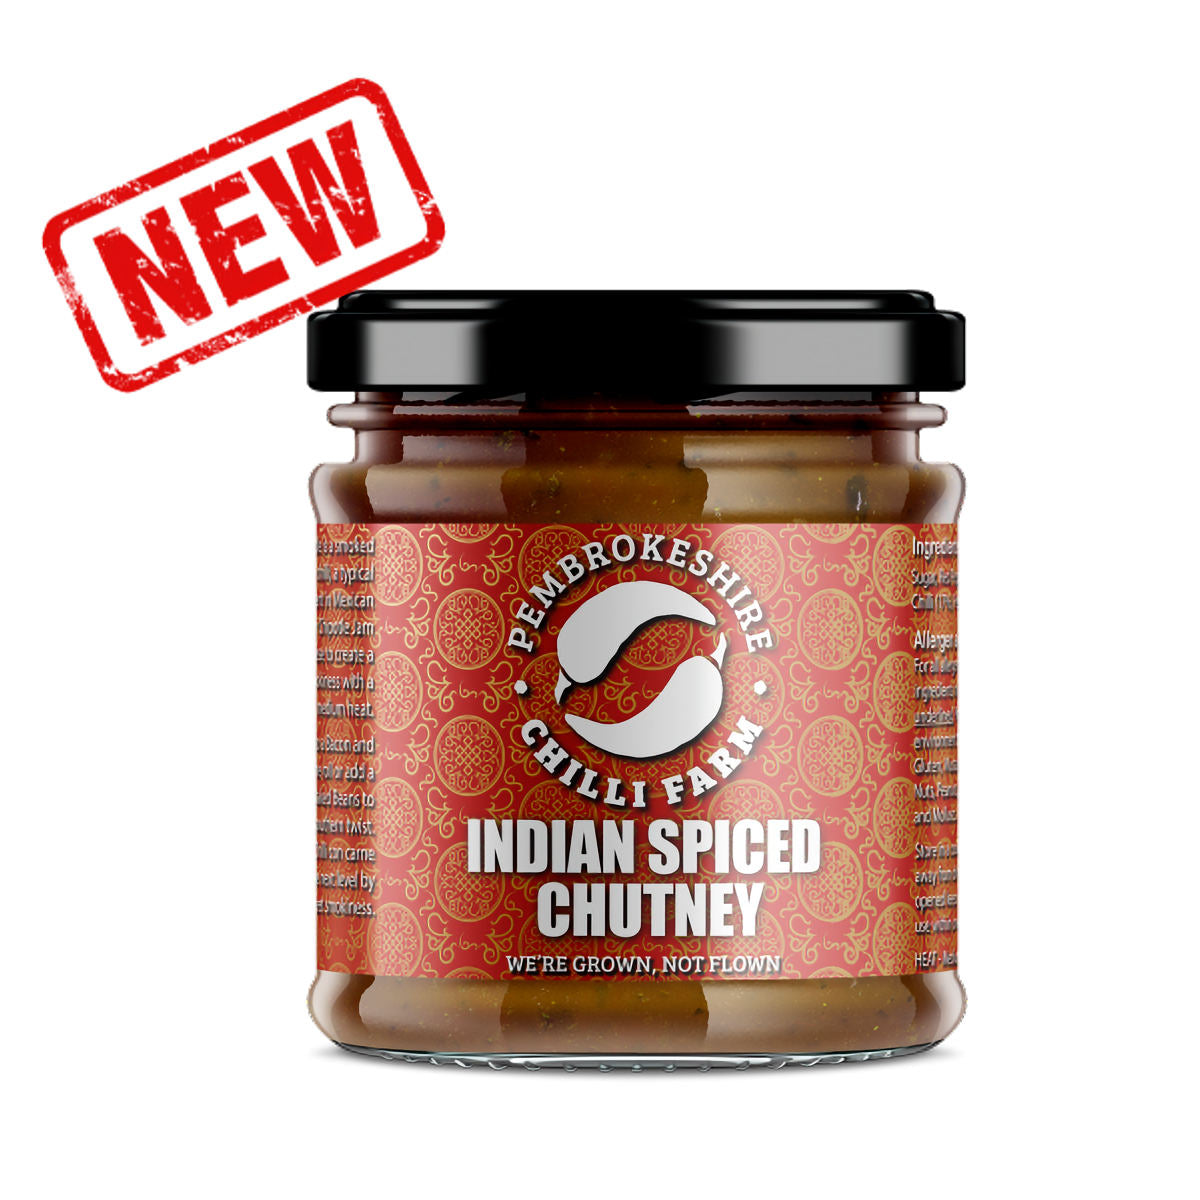 NEW Indian Spiced Chutney